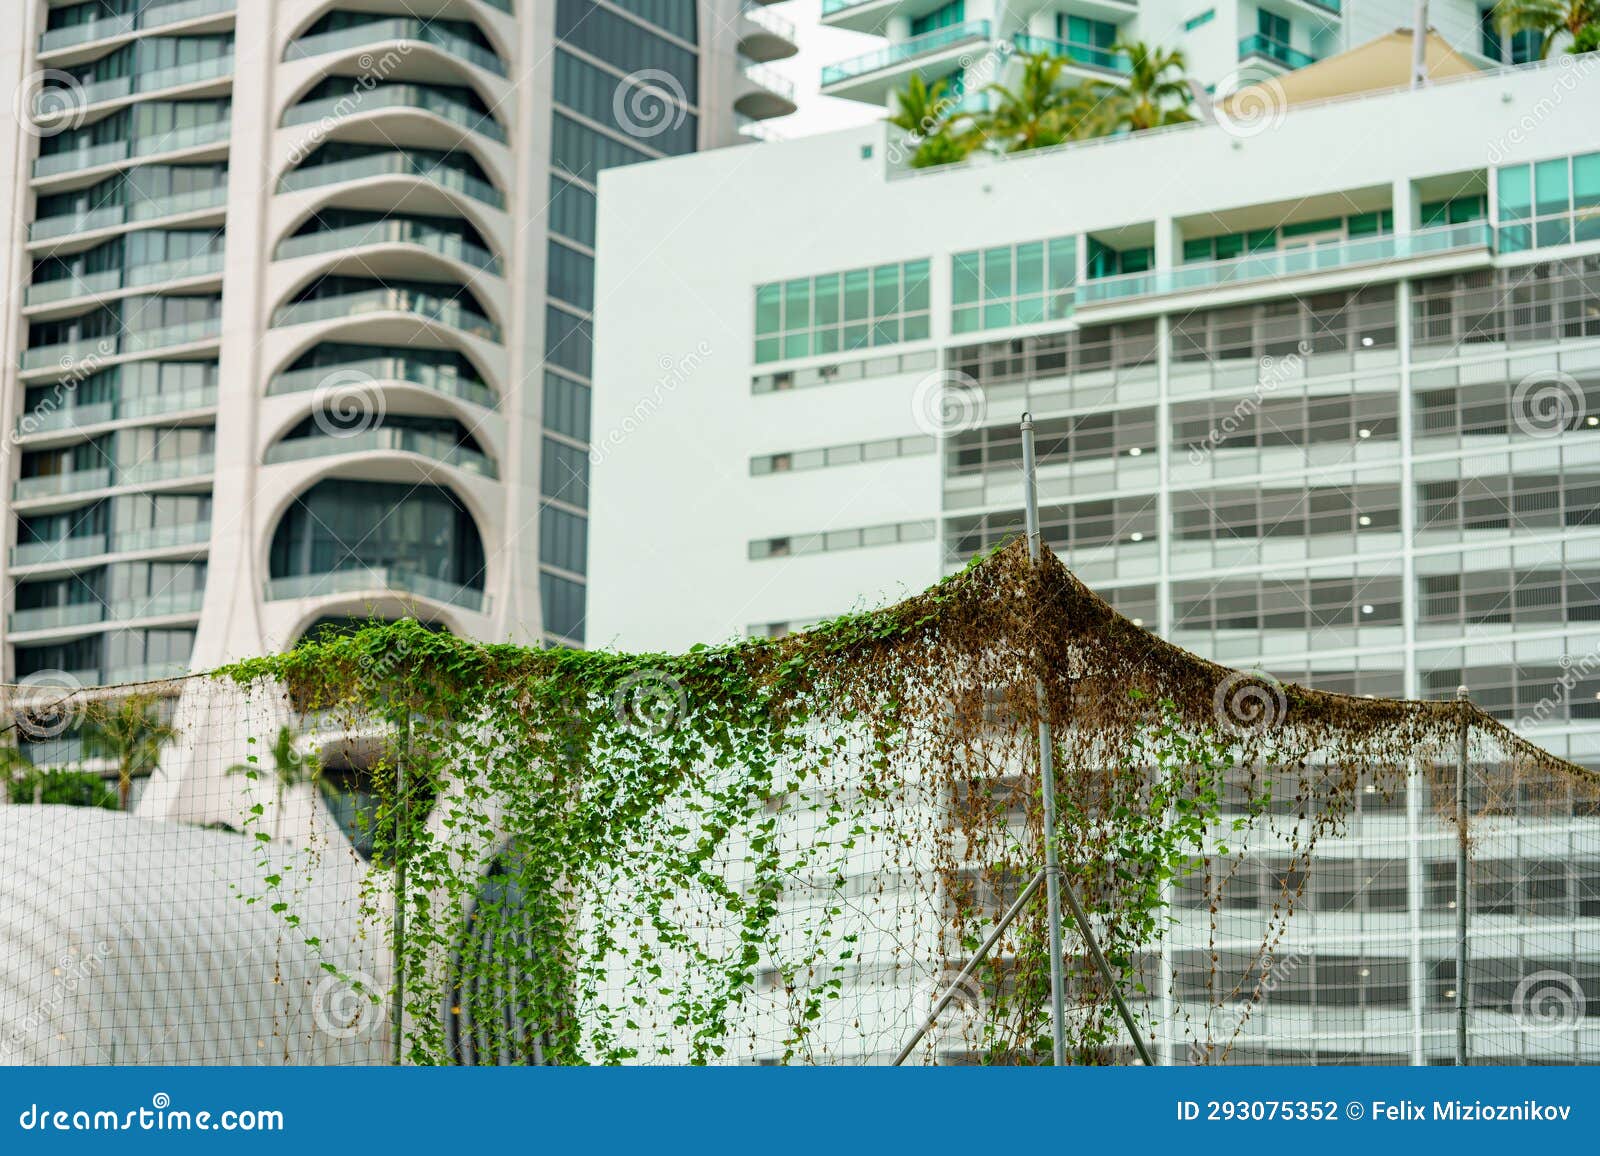 nature vines reclaiming the city of concrete urban jungle